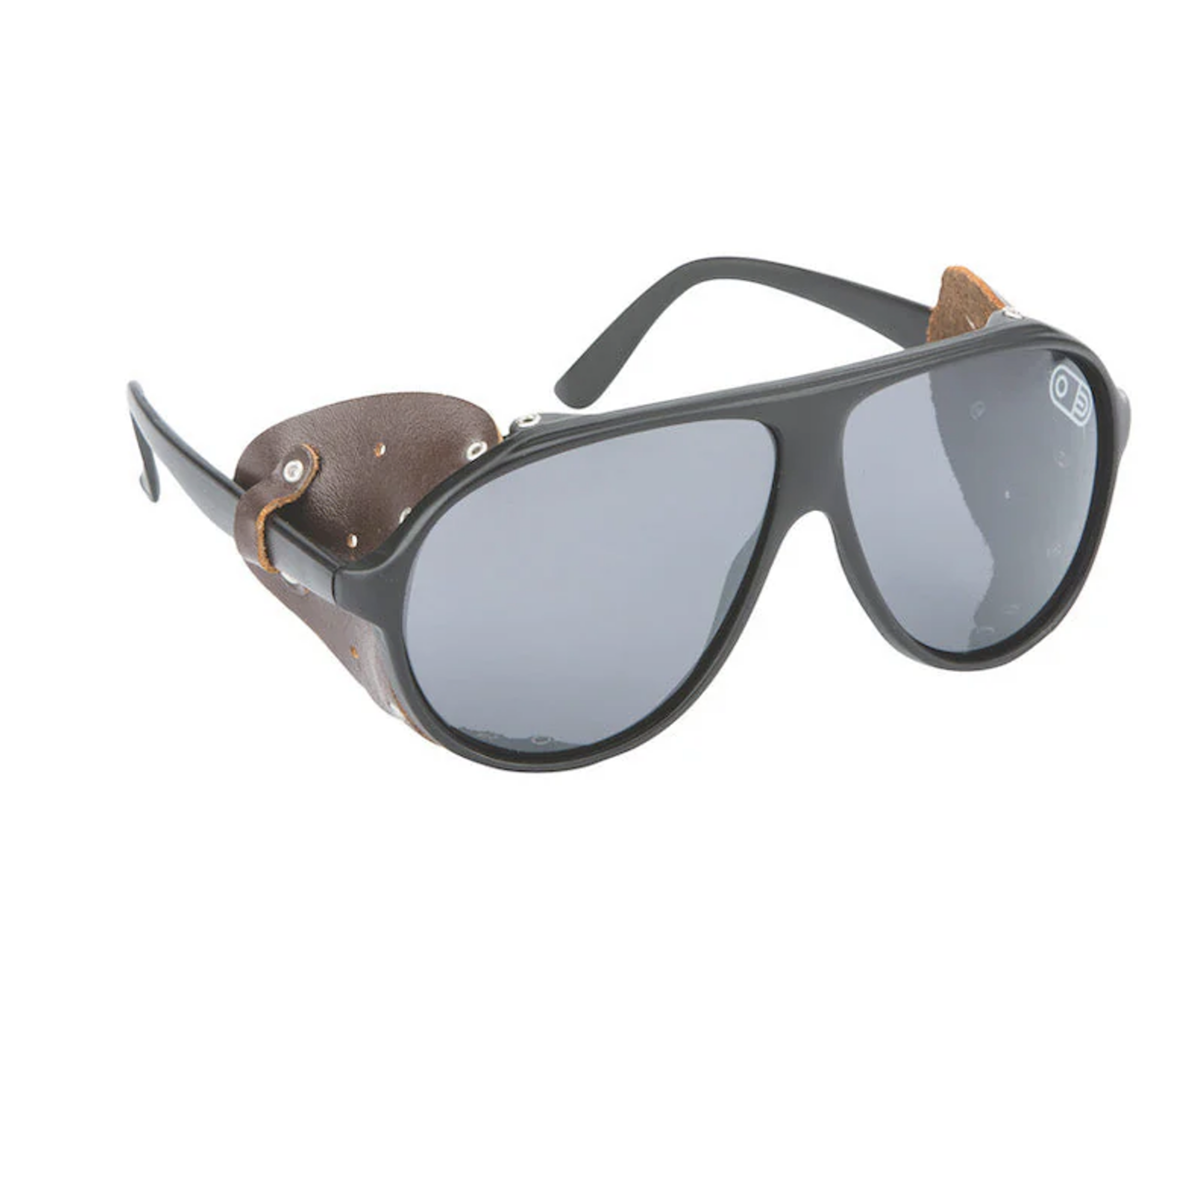 Airblaster Polarized Glacier Sunglasses - Assorted Colors